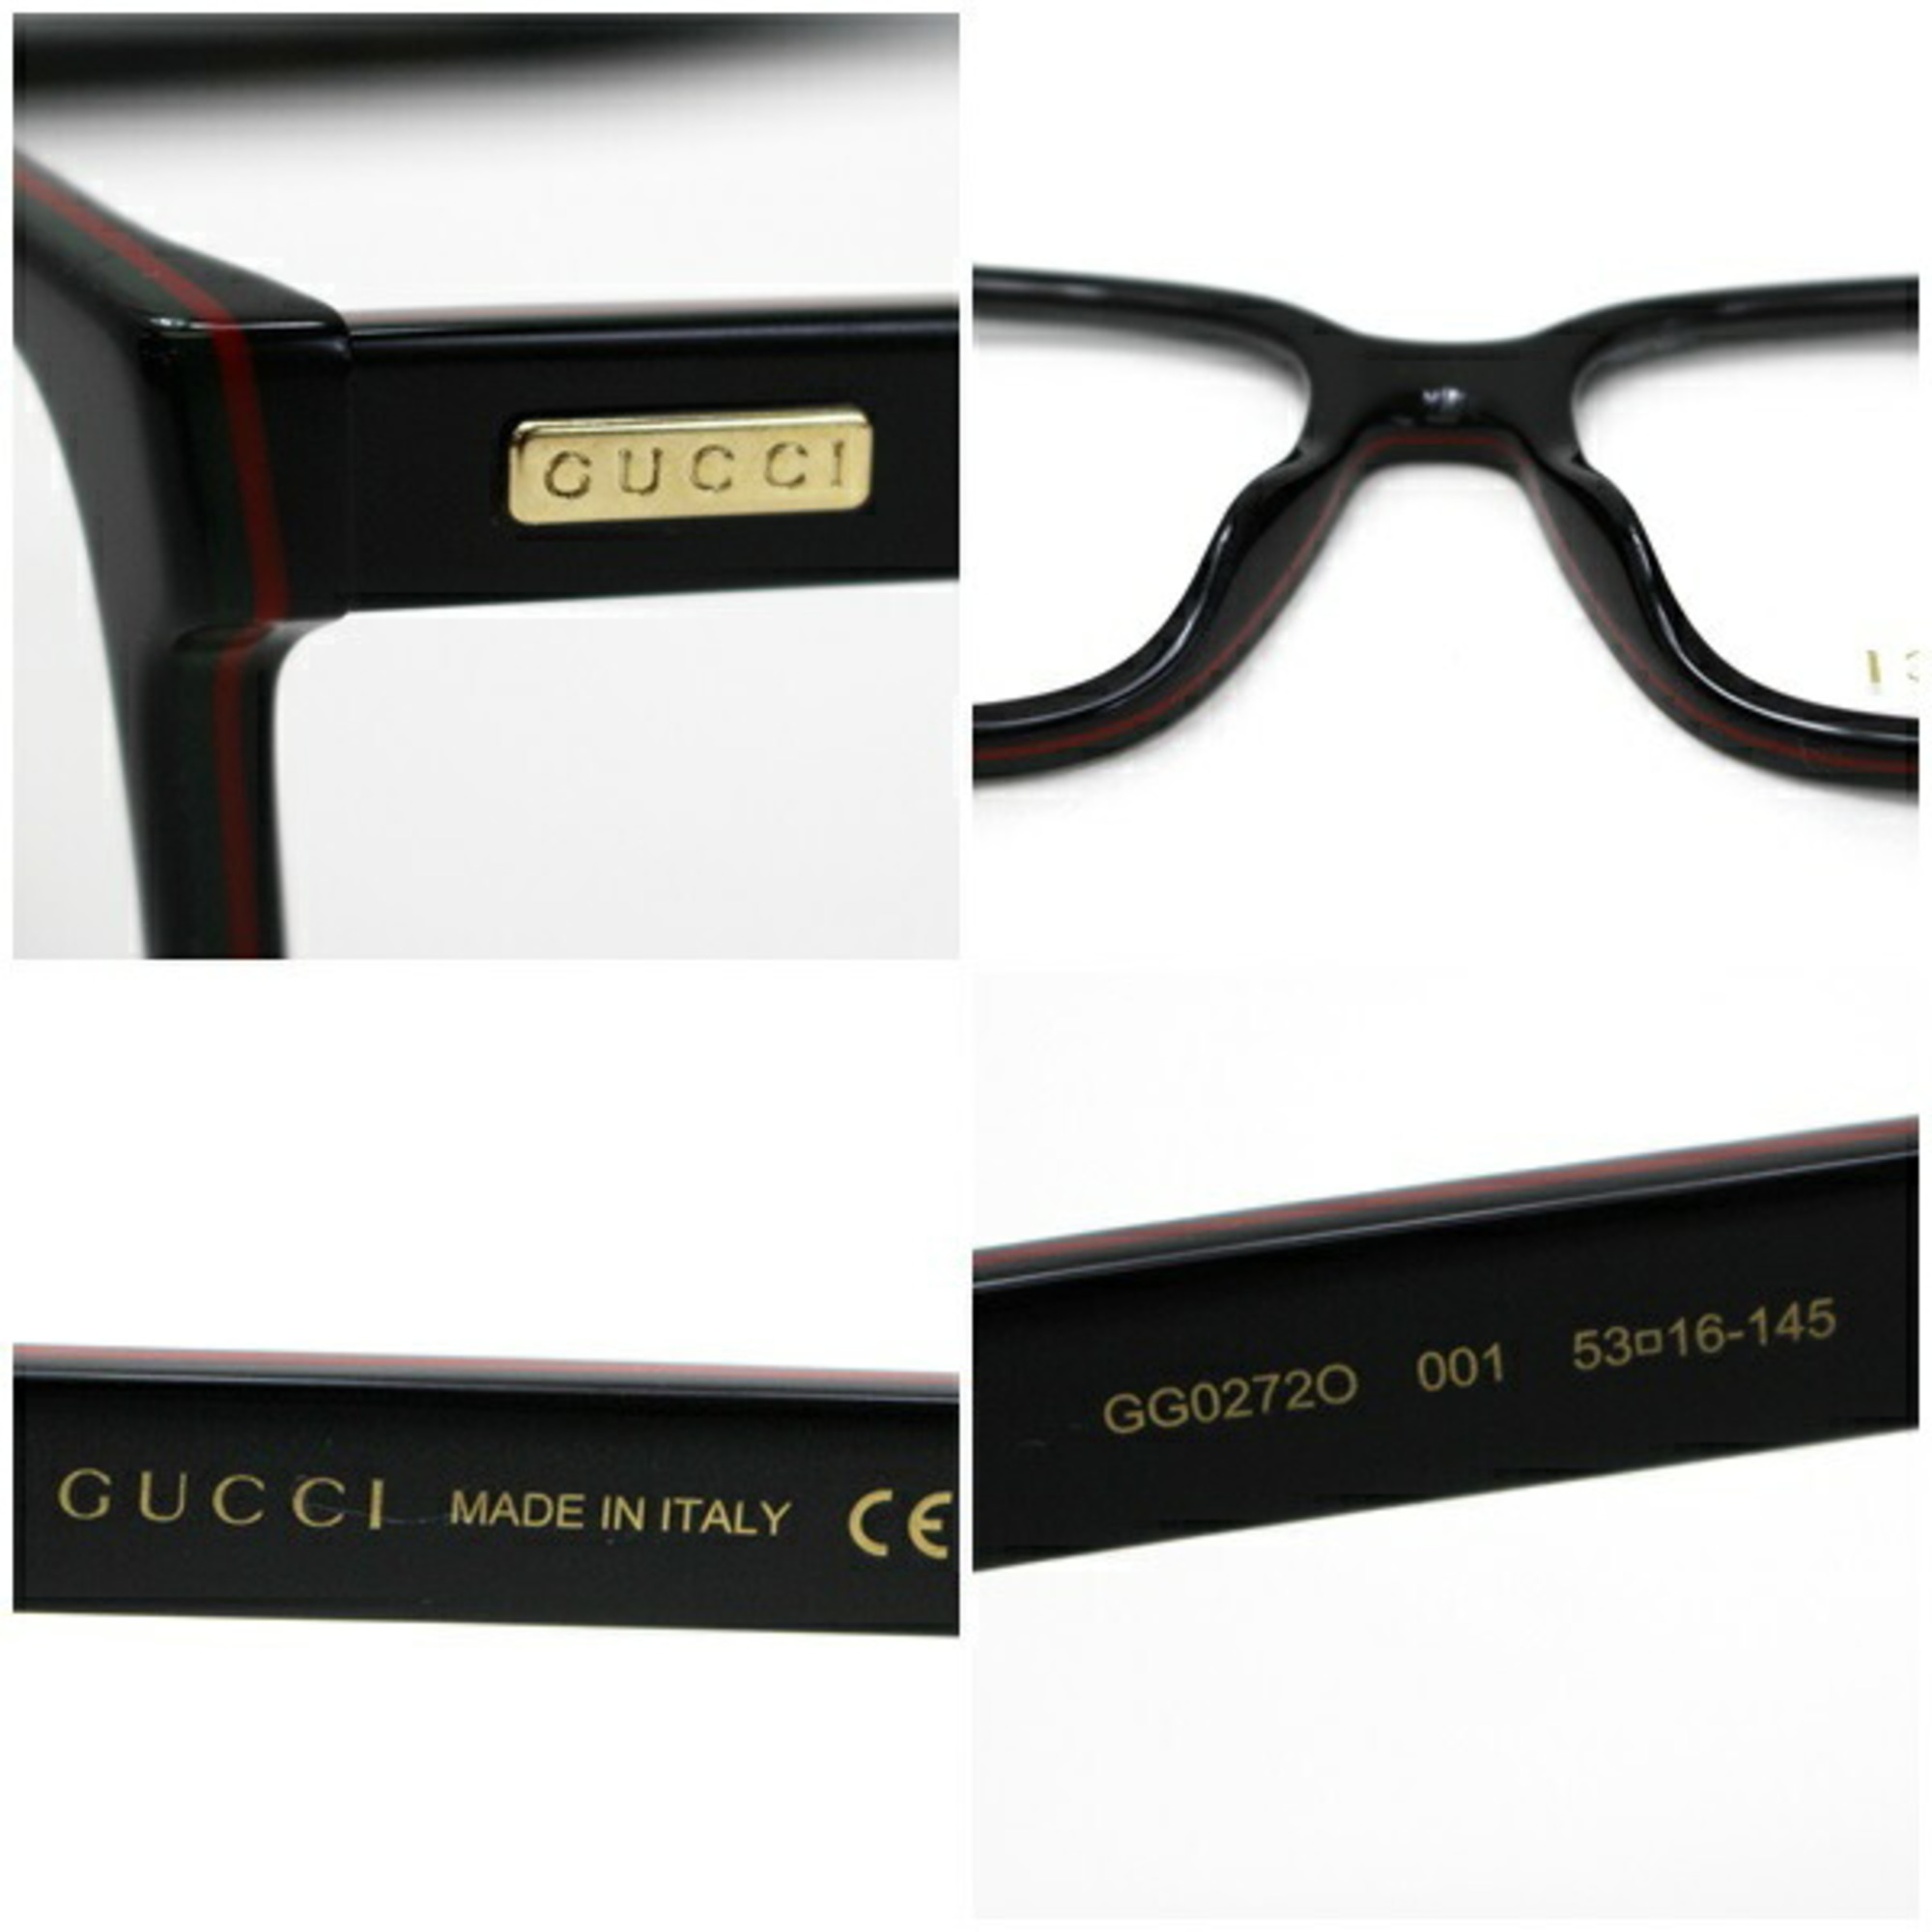 Gucci glasses frame GG2720 53 ro 16-145 black Sherry line GUCCI ladies